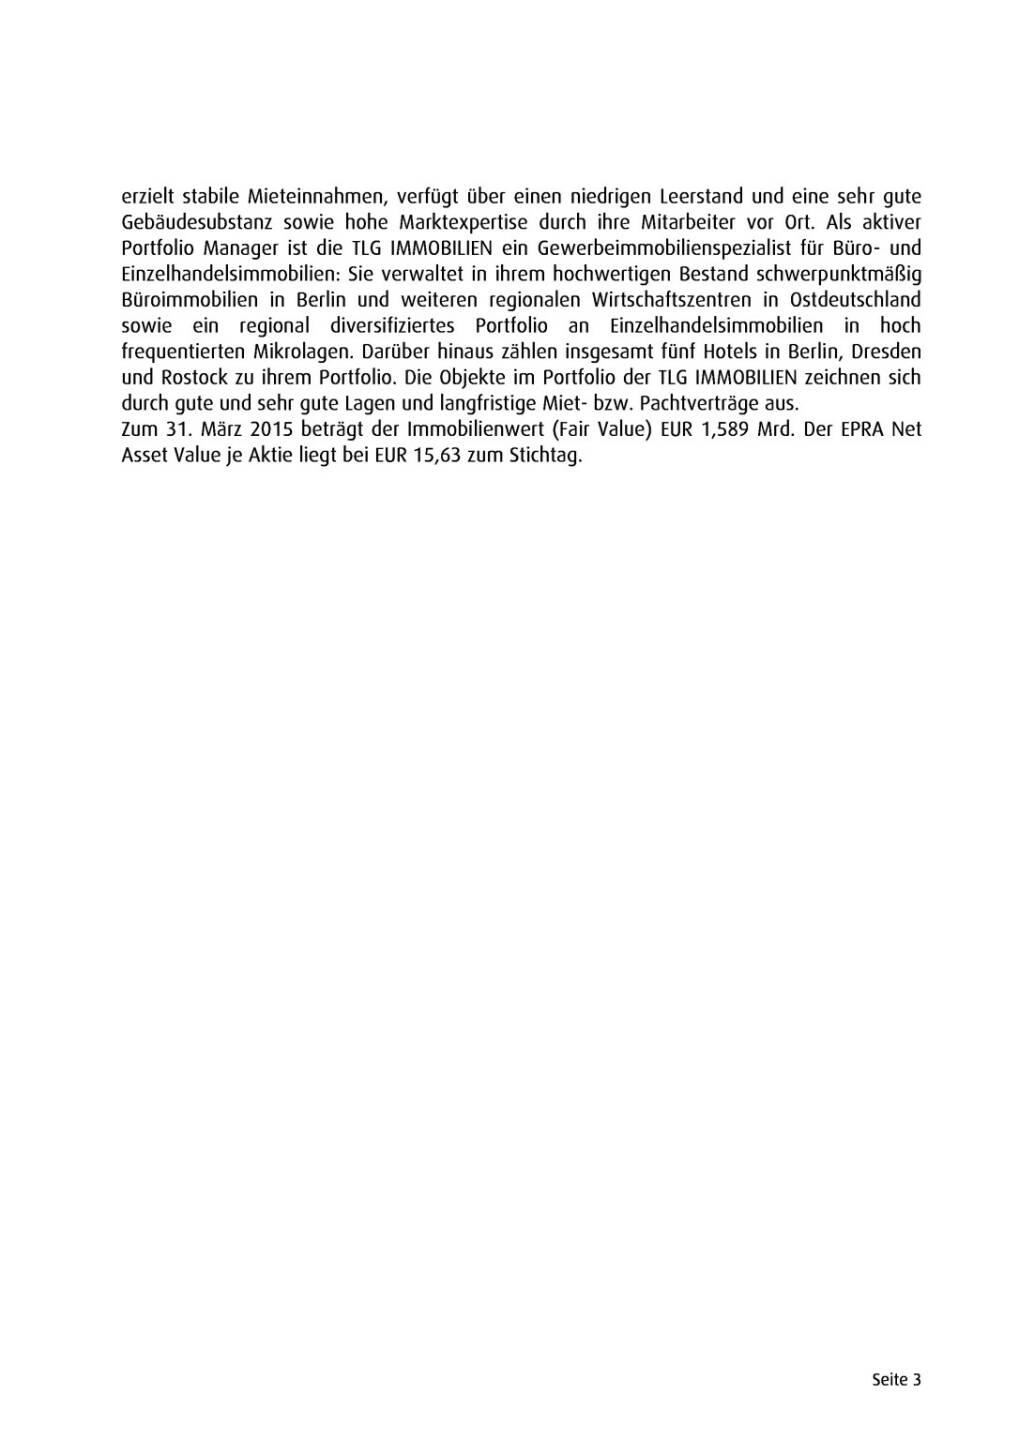 TLG Immobilien HV bestätigt Kurs von Vorstand und Aufsichtsrat, Seite 3/3, komplettes Dokument unter http://boerse-social.com/static/uploads/file_173_tlg_immobilien_hv.pdf